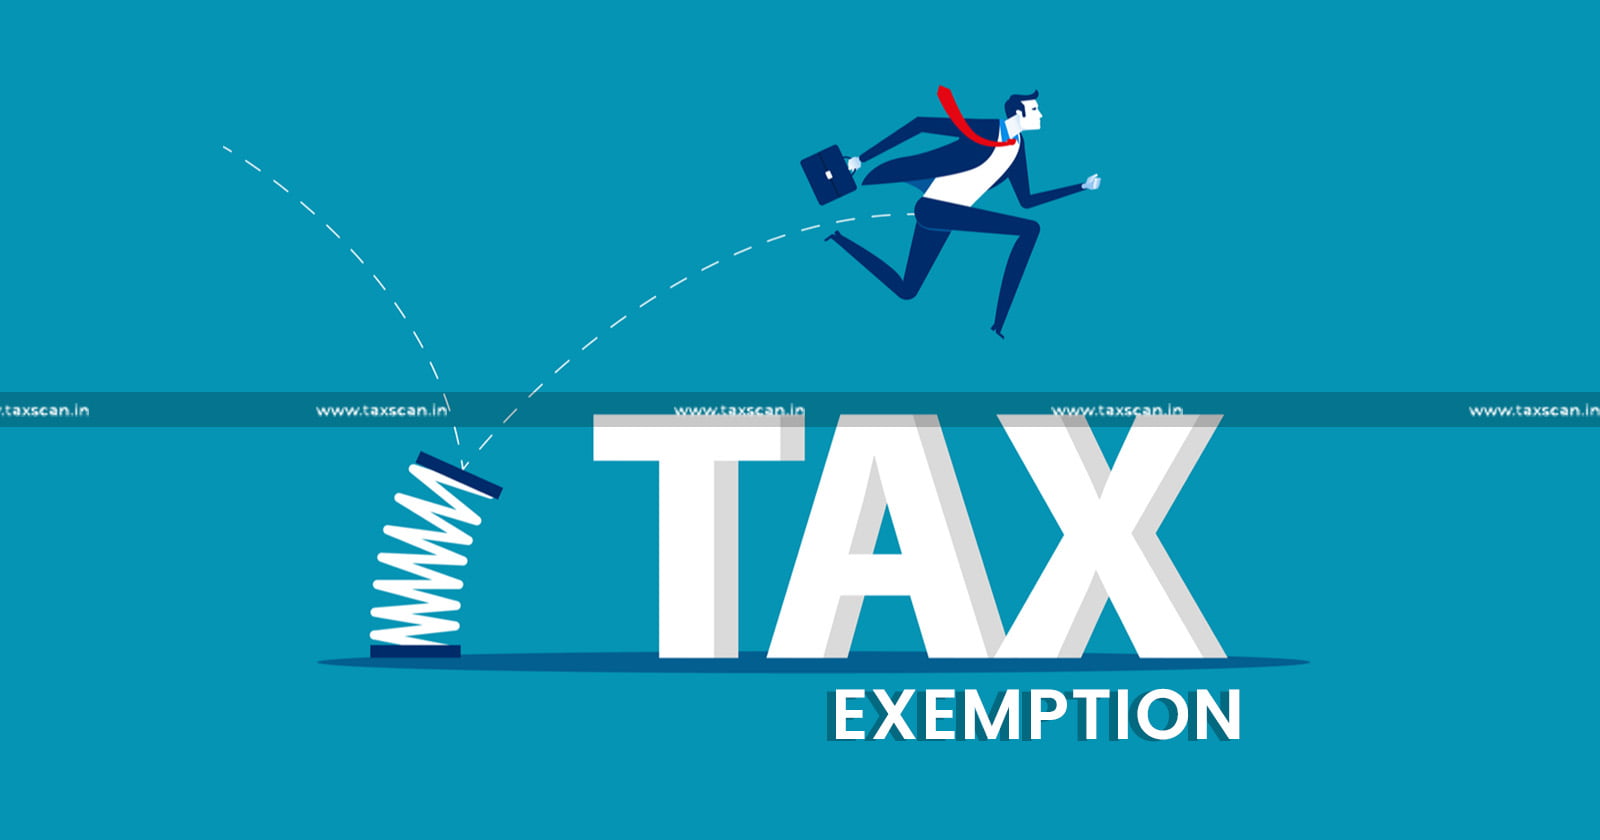 Kerala High Court - Bar attached hotels taxation - Bar tax - Income Tax - Tax exemption - Hotel industry tax - taxscan